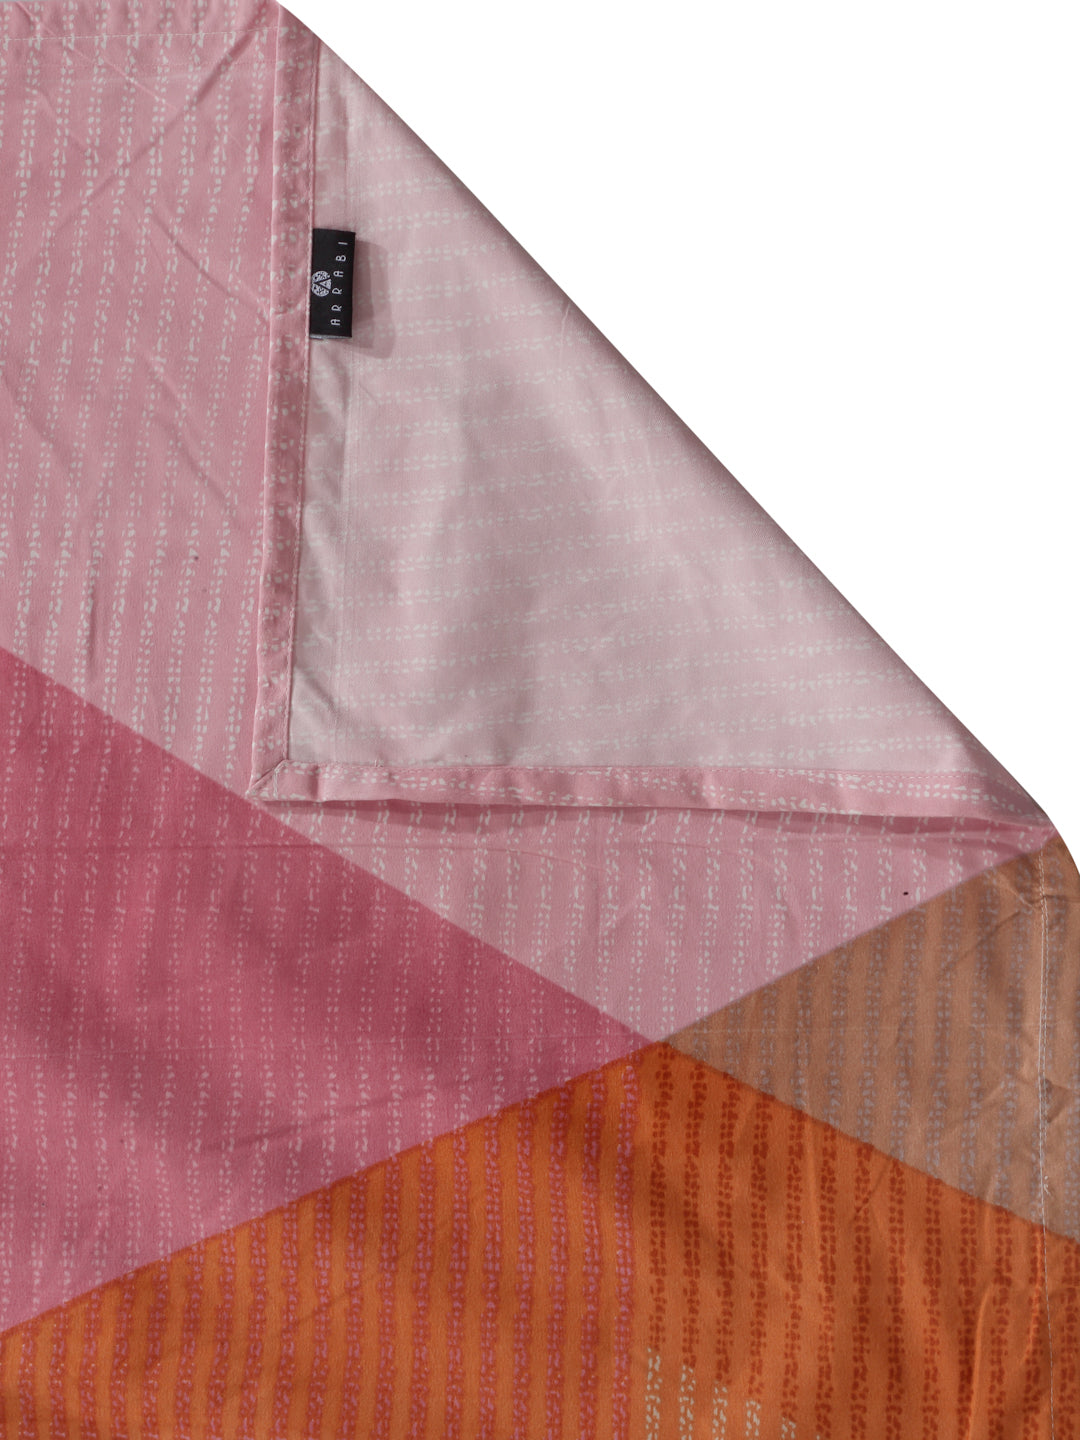 Arrabi Multi Graphic TC Cotton Blend Super King Size Bedsheet with 2 Pillow Covers (270 X 260 cm)